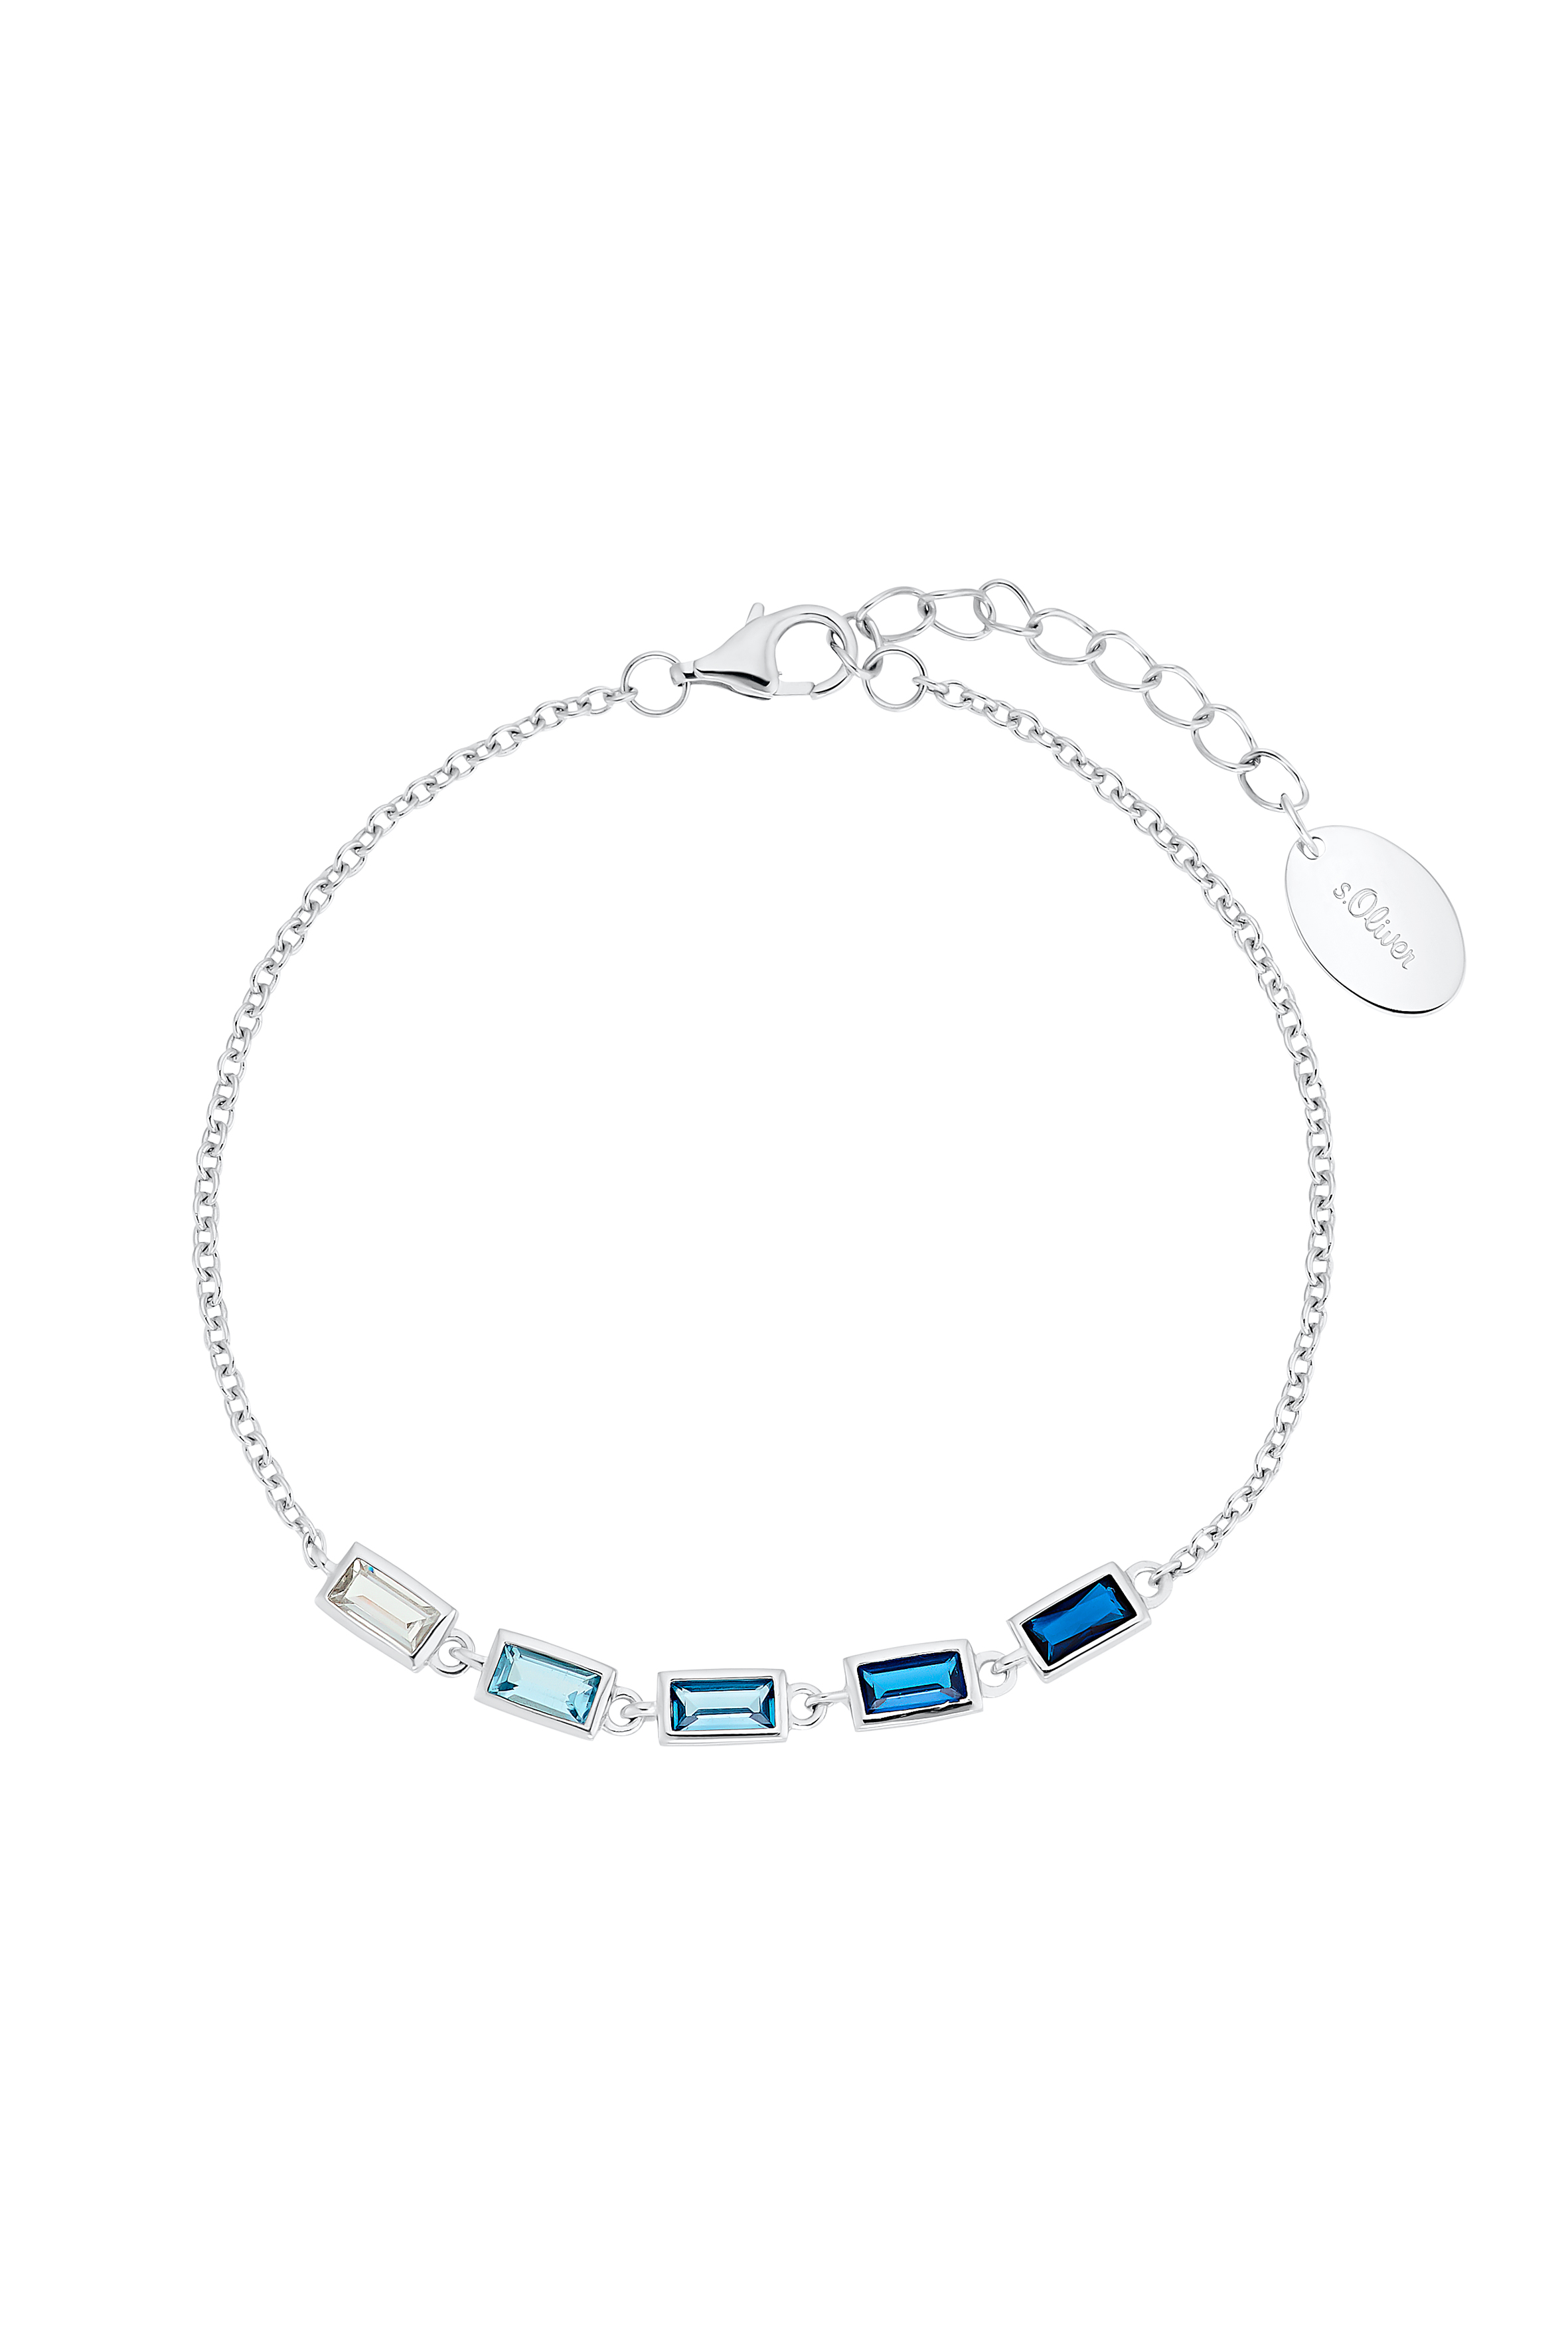 s.Oliver Damen Armband 2031408 Silber Zirkonia blau